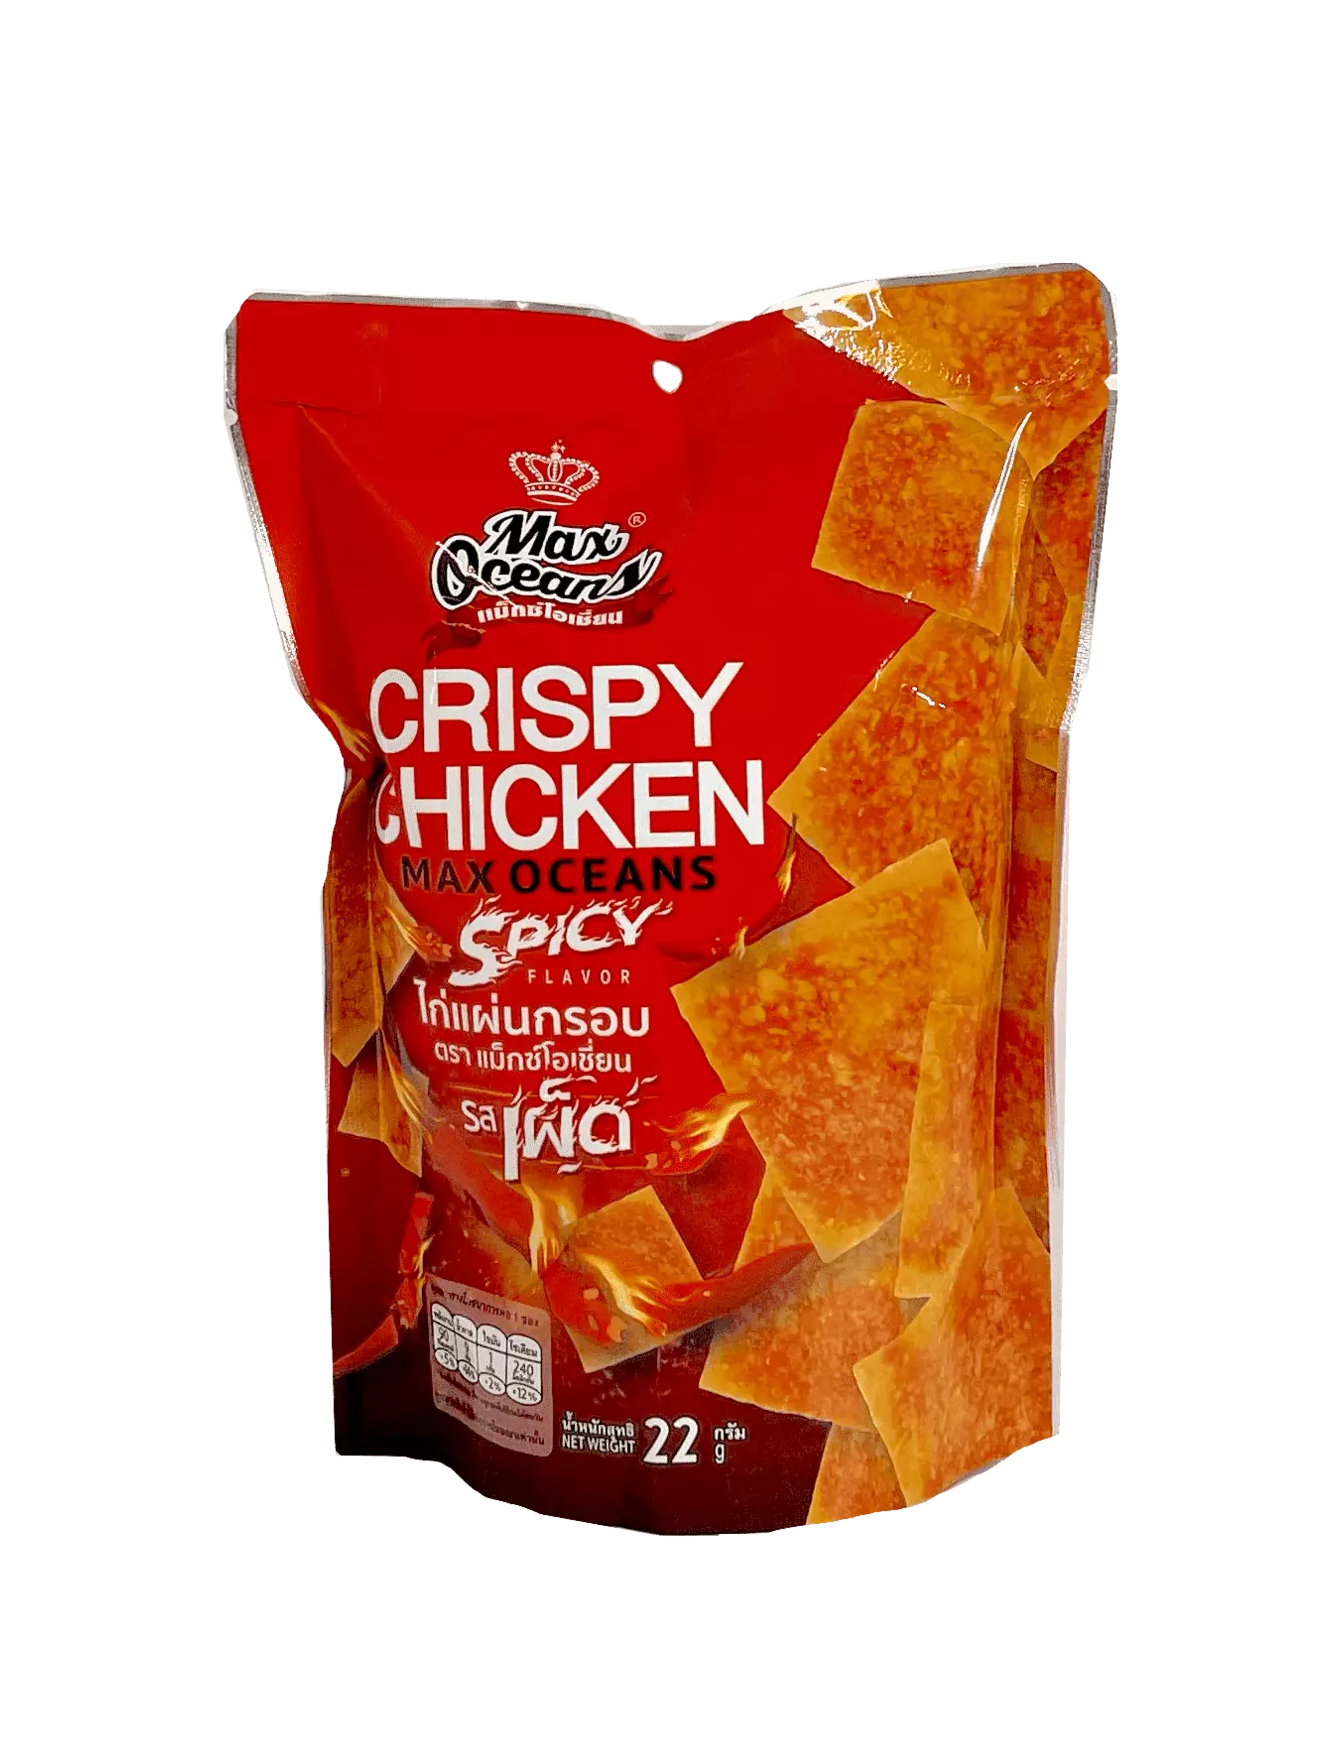 Best Before: 2022.10.09 Crispy Chicken Skin With Spicy Flavour 22g Max Oceans Thailand